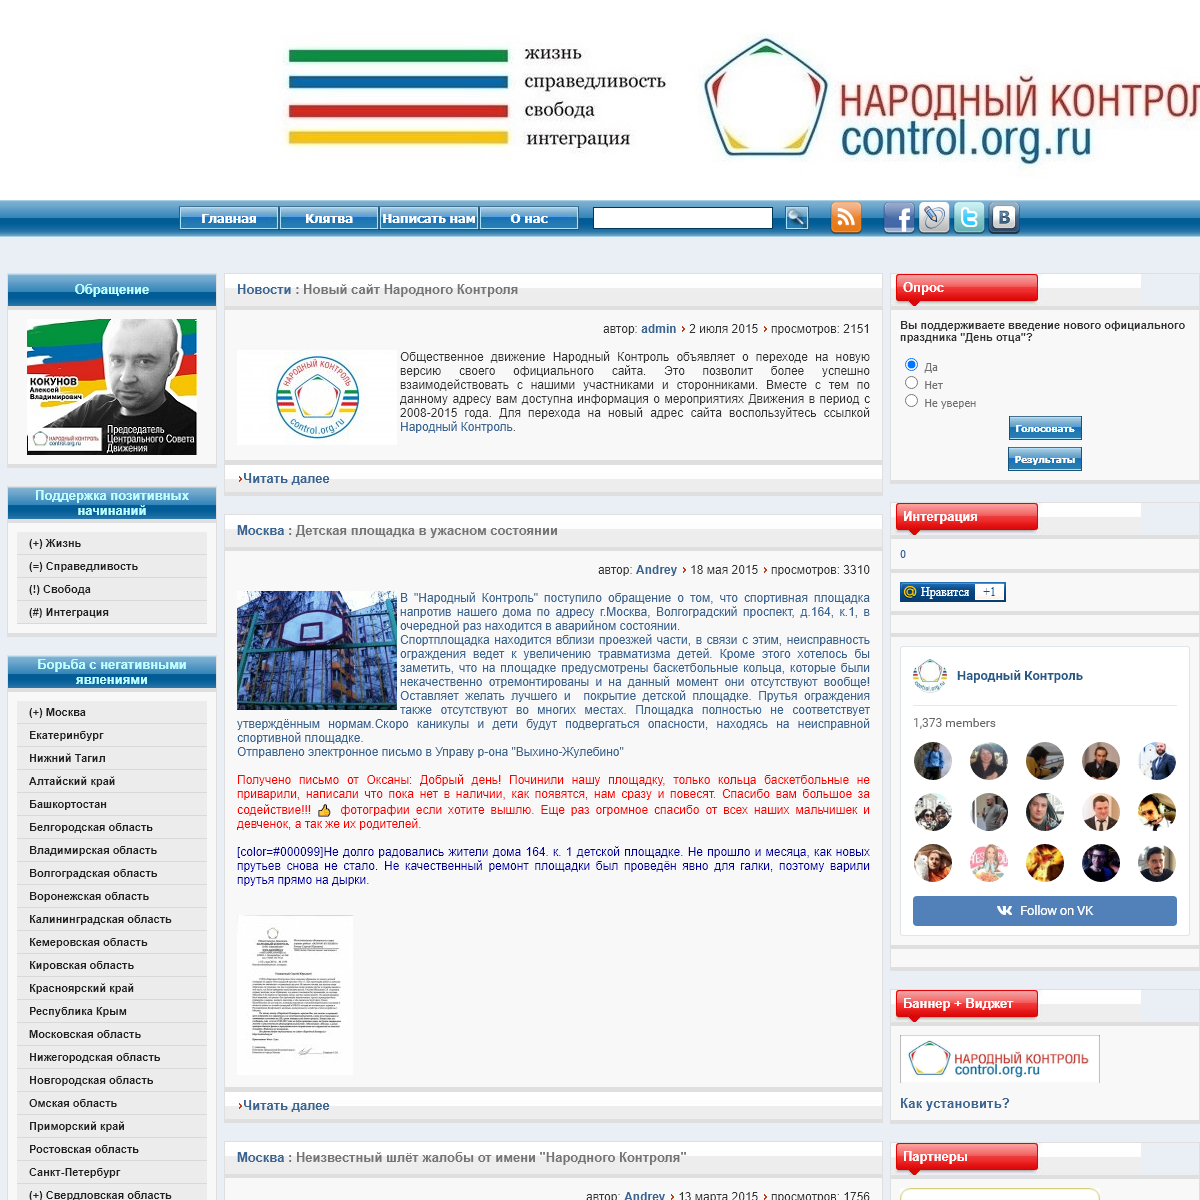 A complete backup of public.org.ru